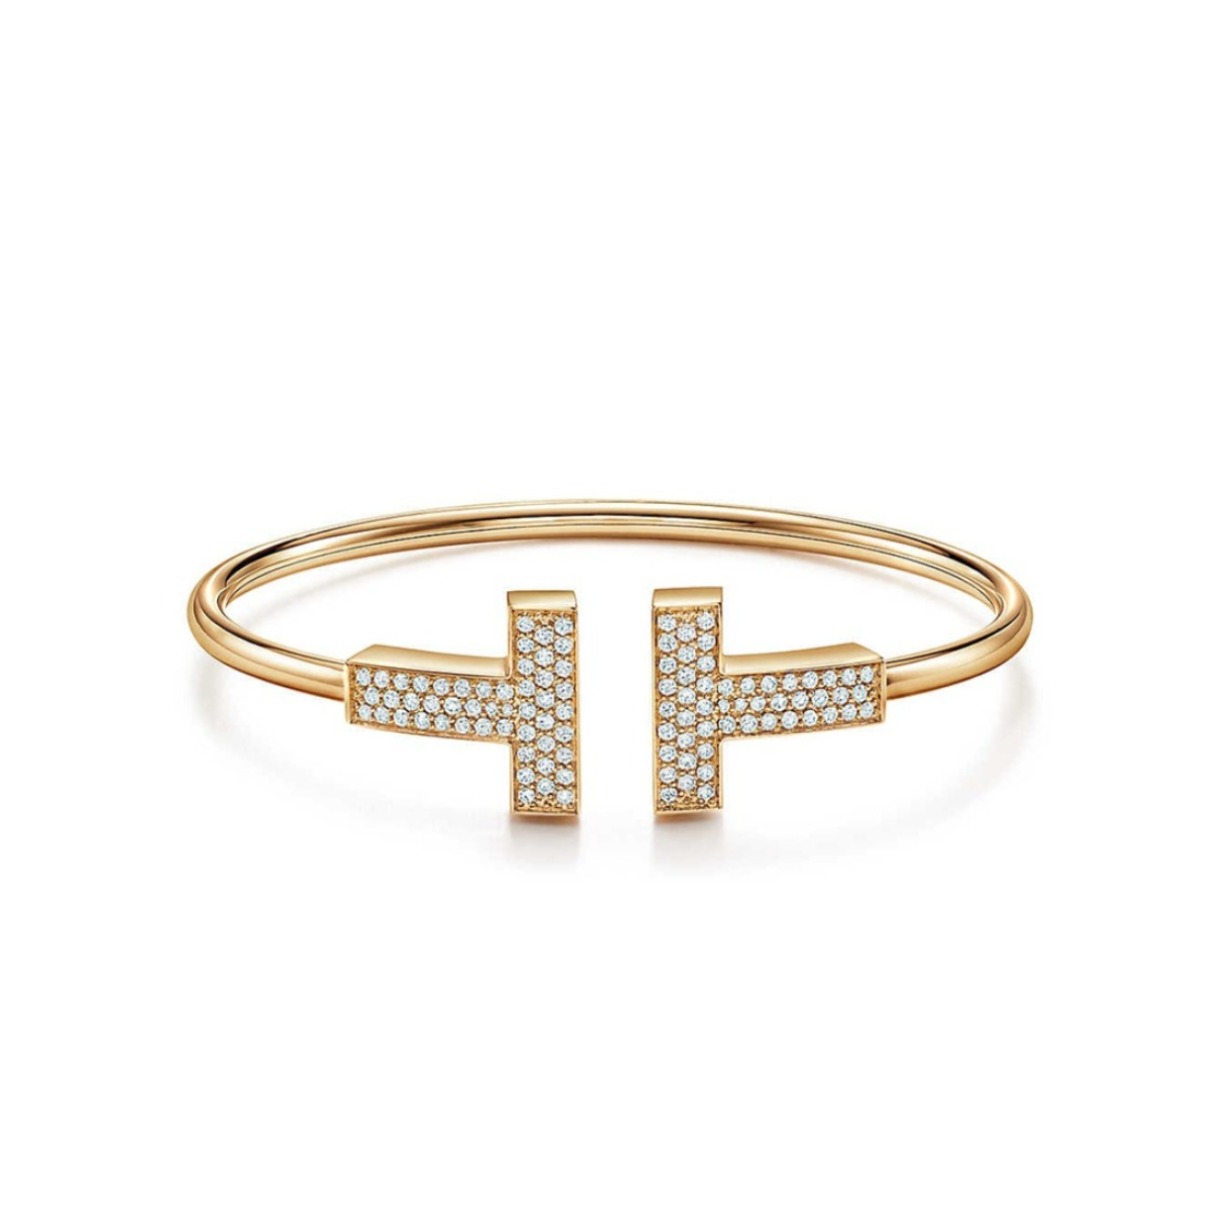 Tiffany &Co./蒂芙尼 T系列 18K金镶嵌钻石手镯 67990870